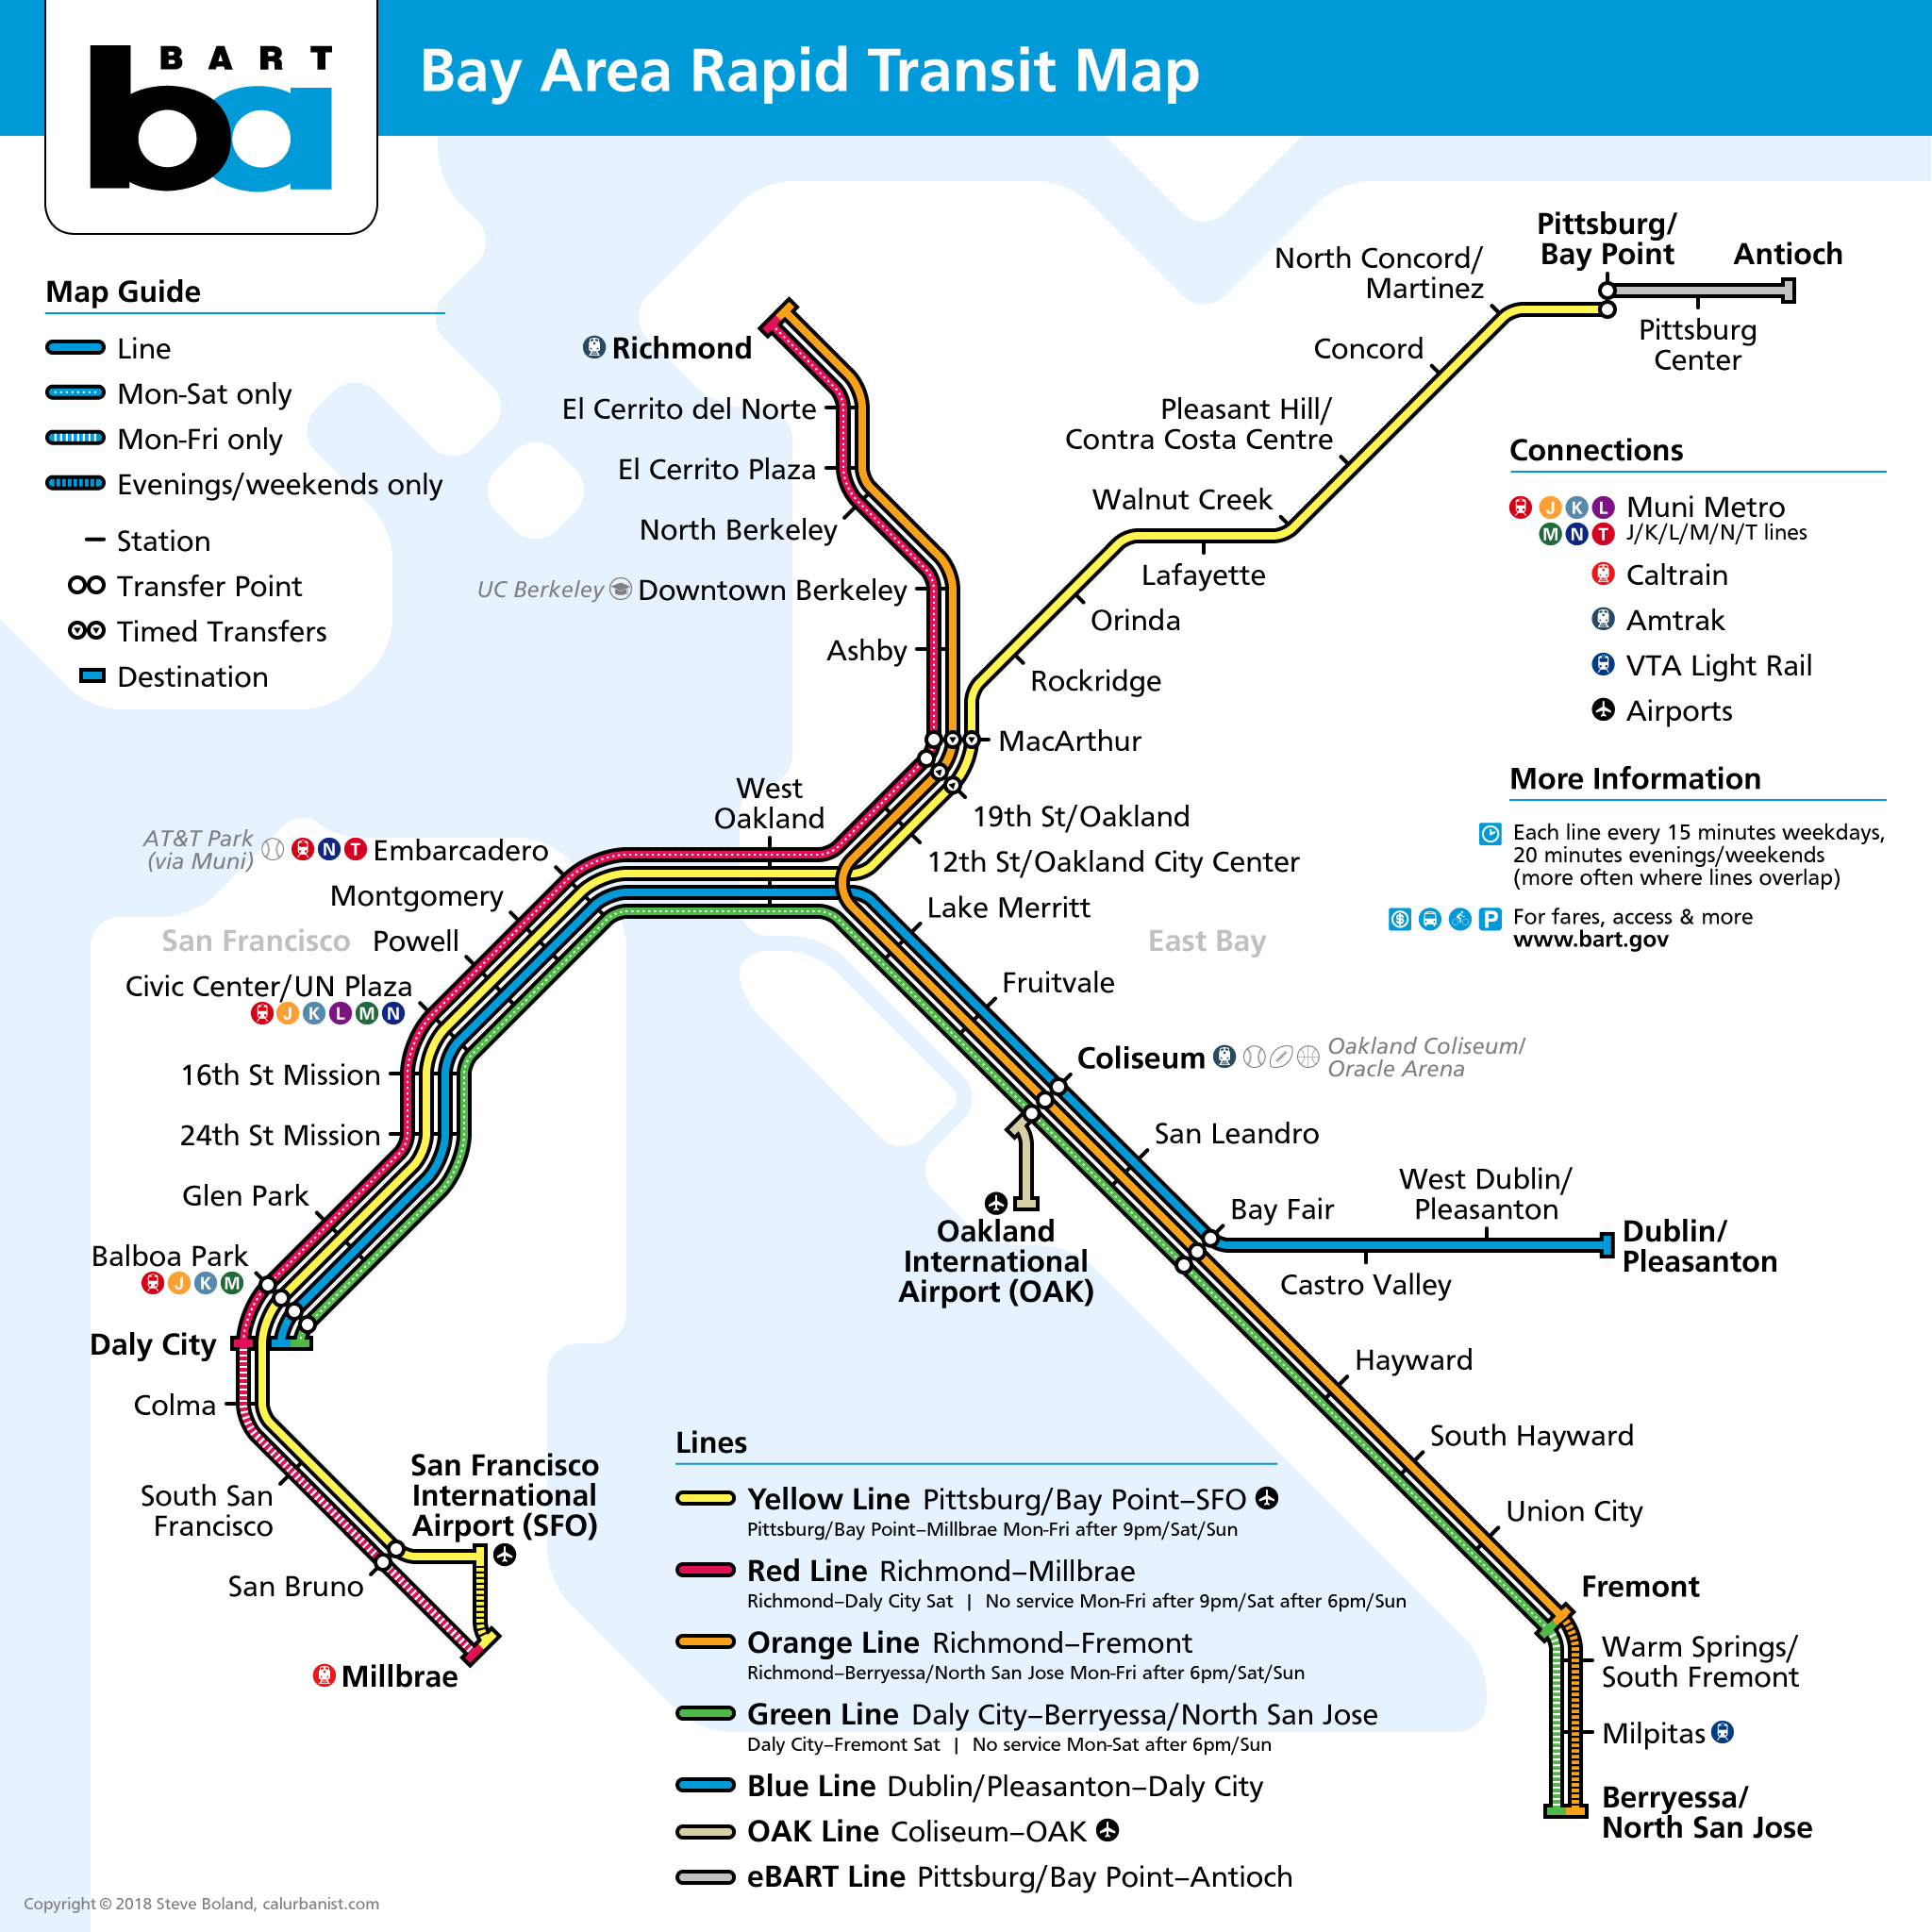 Bay Area Rapid Transit Logo - Bay Area Rapid Transit